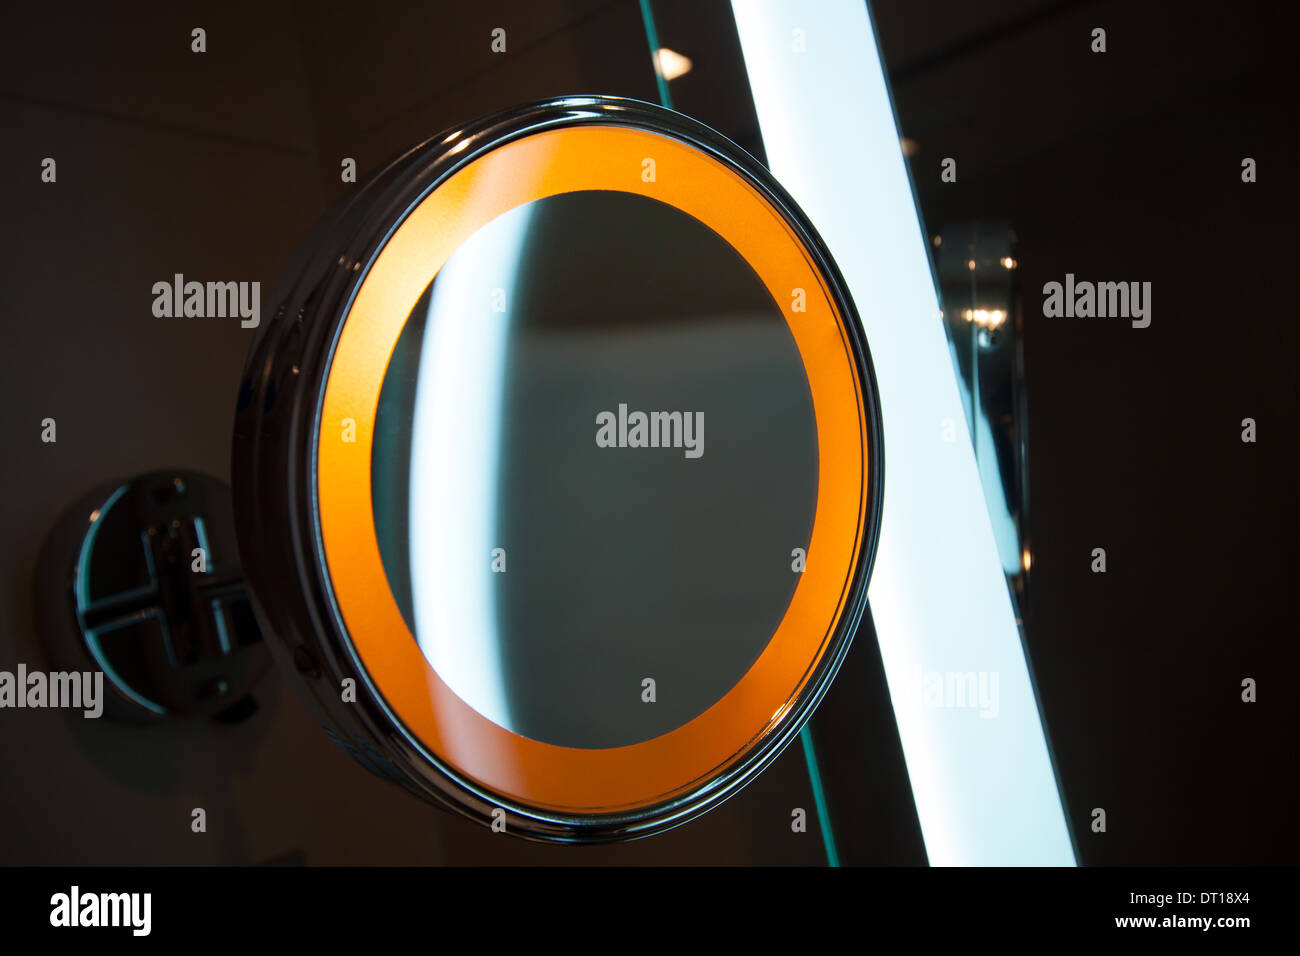 Round mirror with orange light in the bathroom Stock Photo